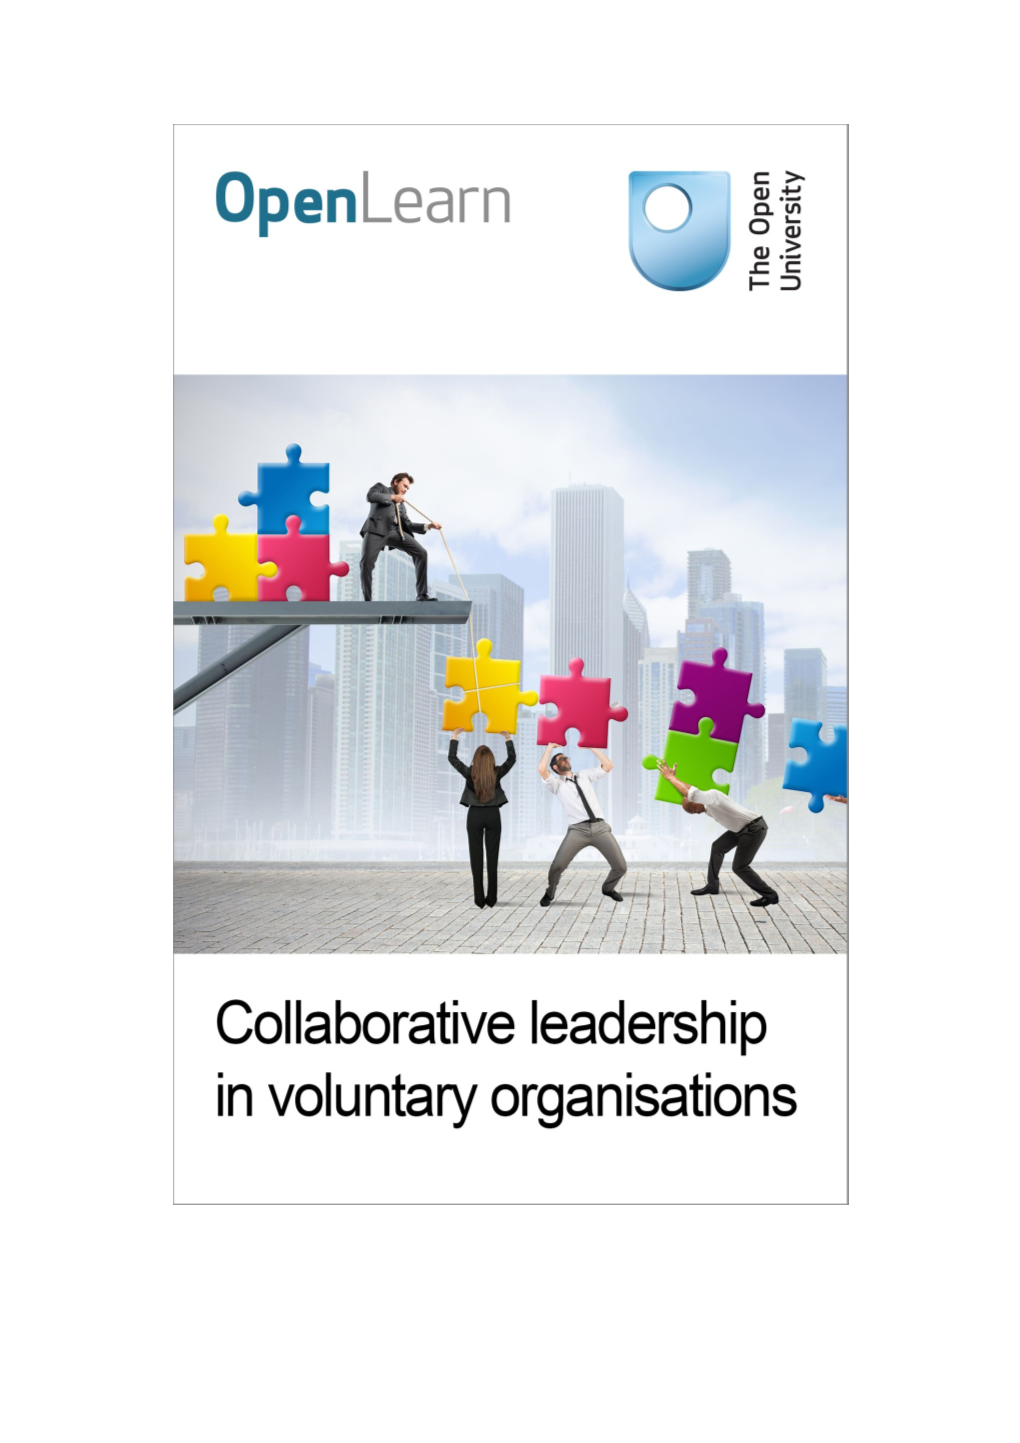 Week 7 Collaborative Leadership and Power